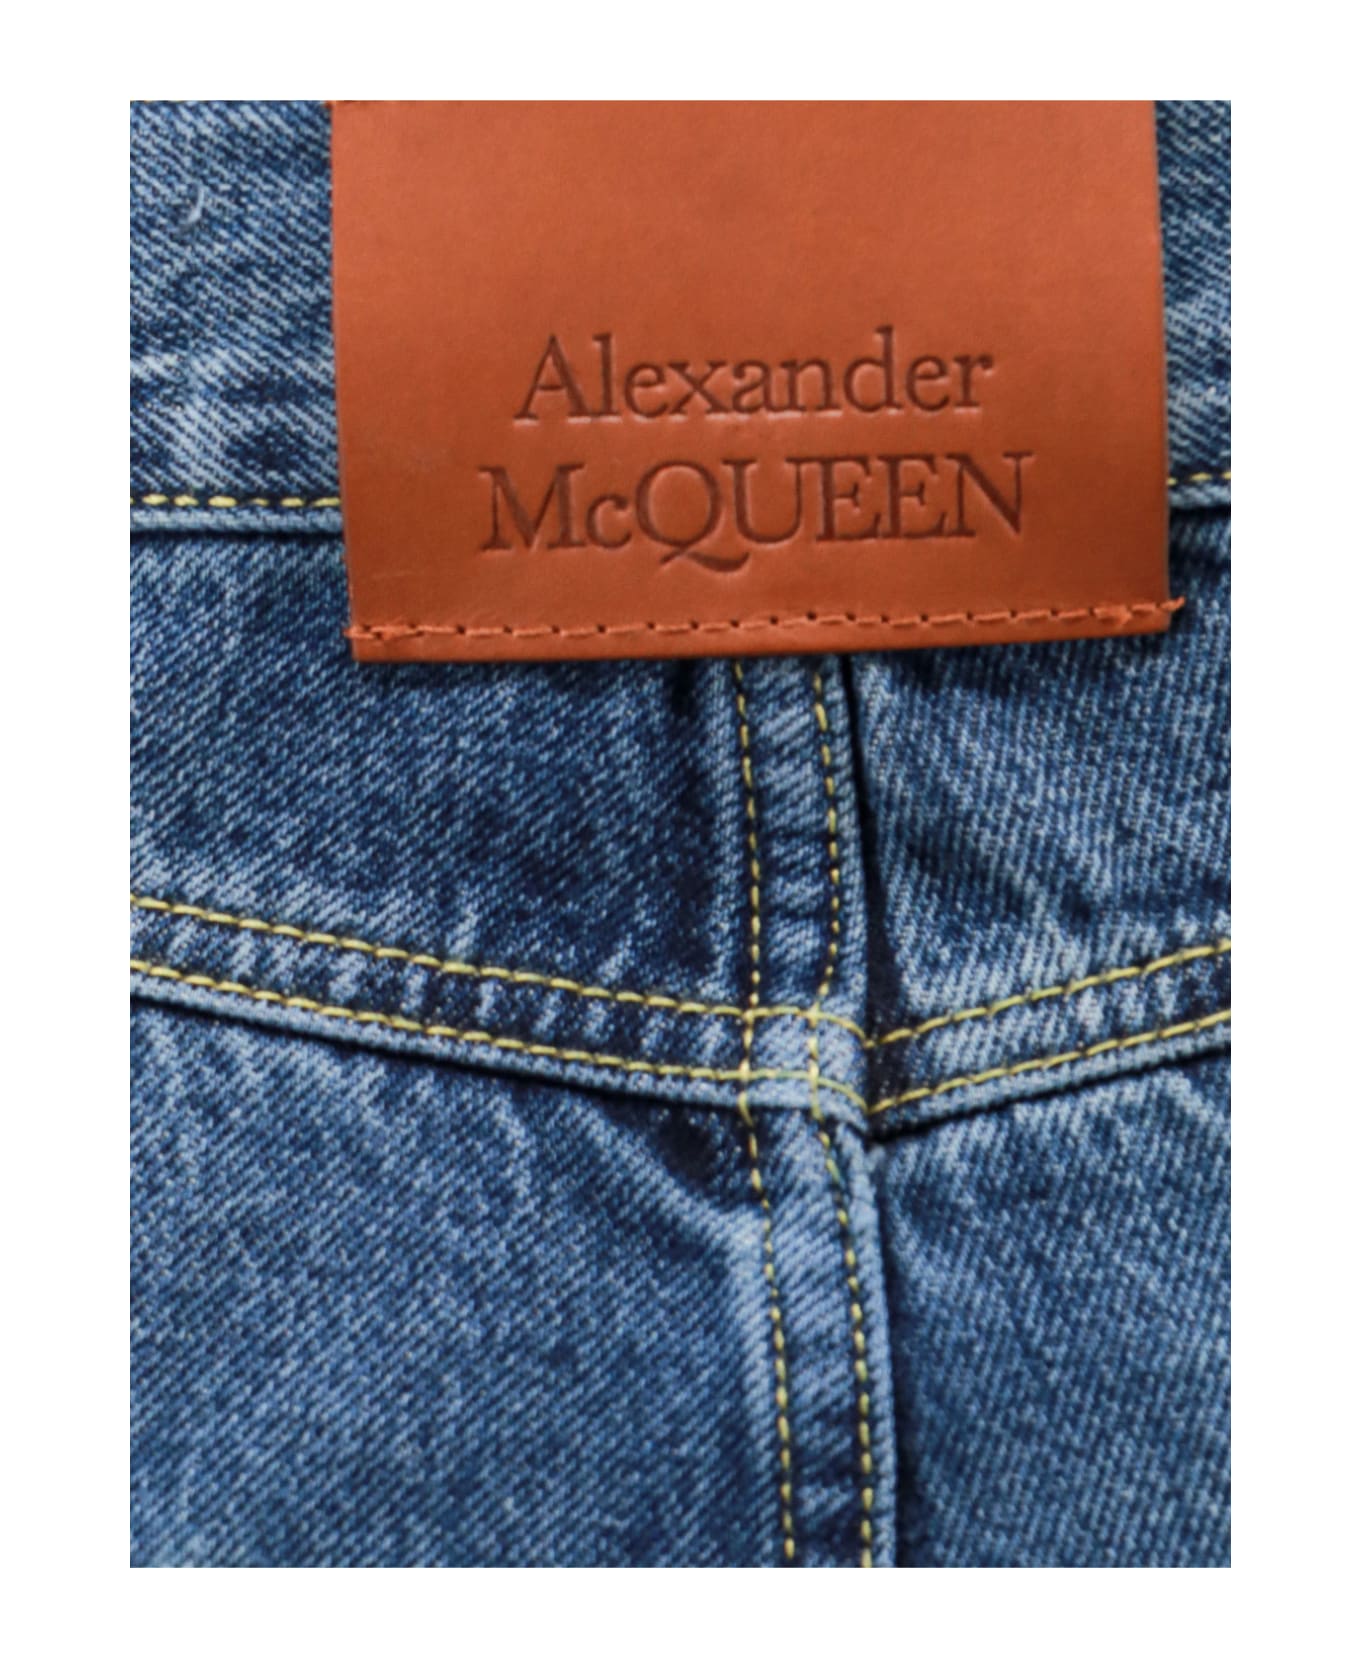 Alexander McQueen Cuffed Hems Jeans - Blue Washed デニム